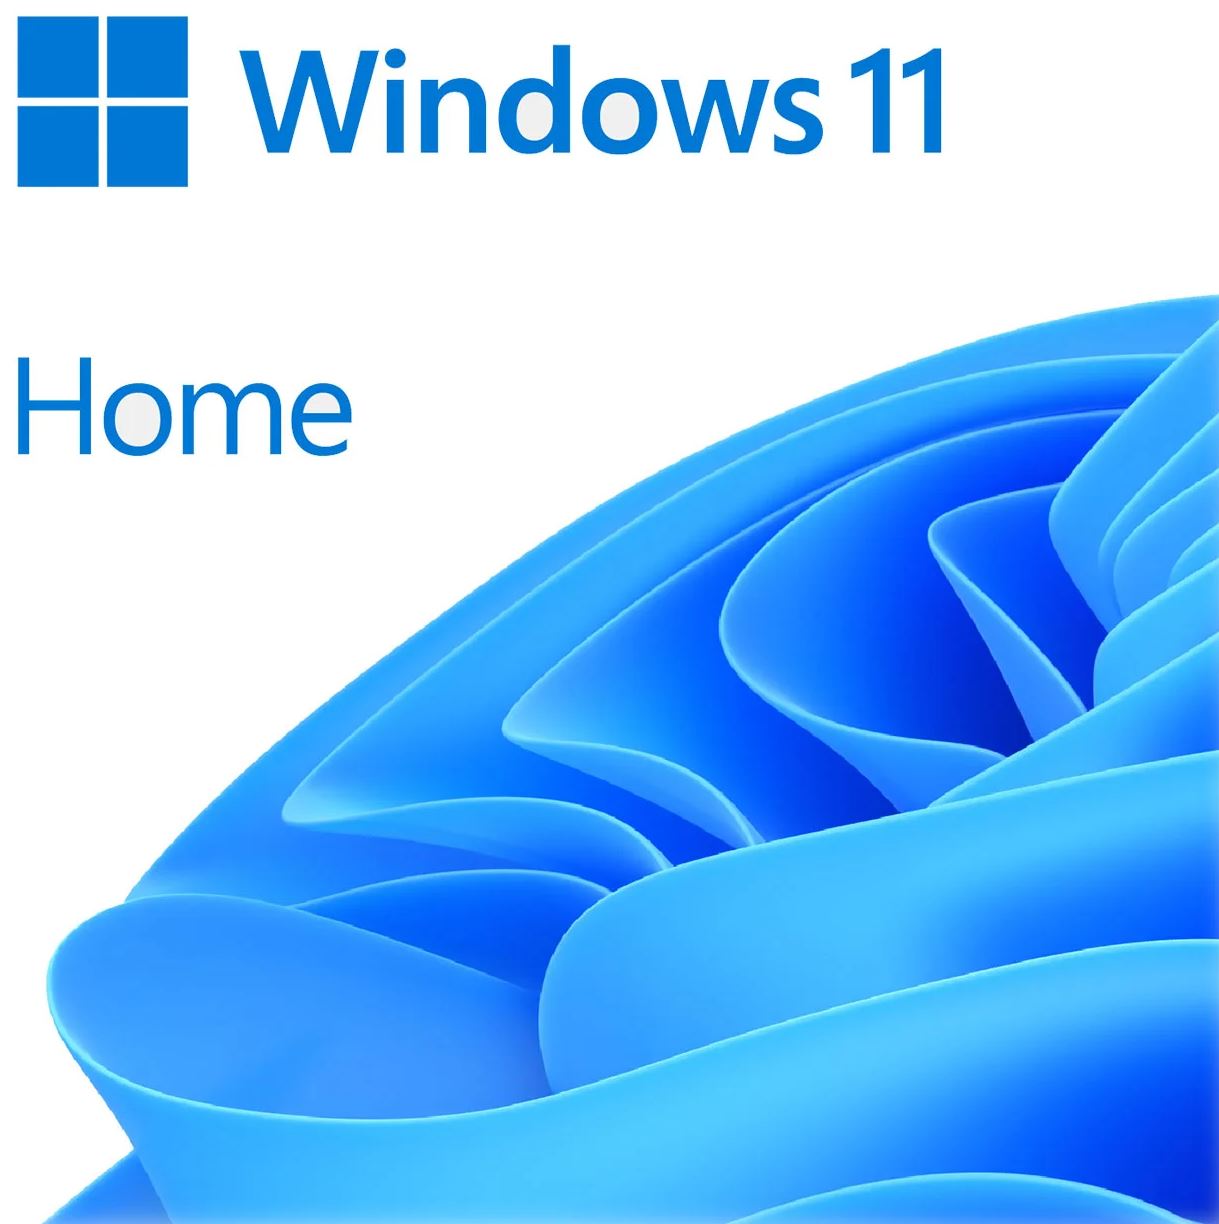 Microsoft Windows 11 Home 64-Bit DVD - OEM (KW9-00632)